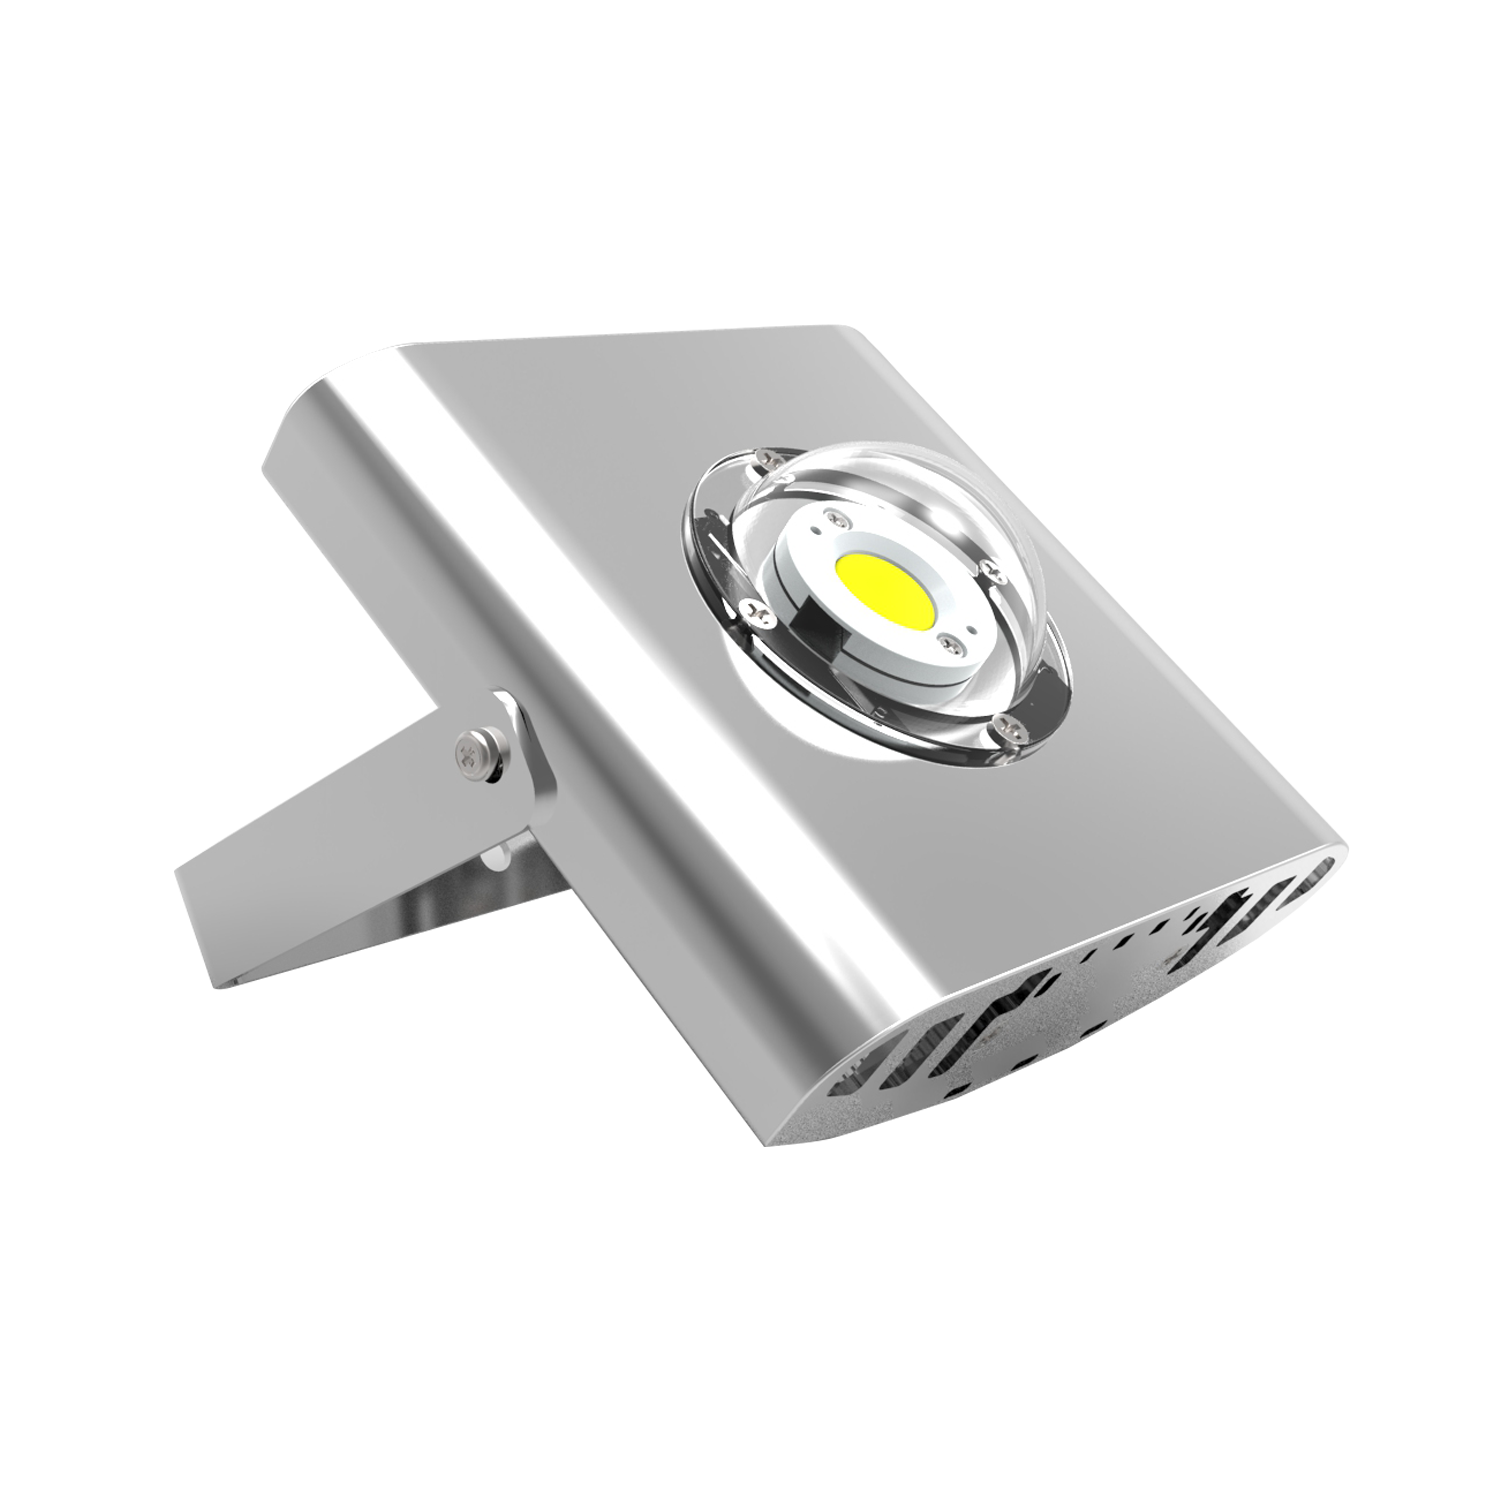 Aigostar - Confezione da 5 Faretto a LED COB，20W, 1800LM，Impermeabile IP65, Luce Naturale 4000K[Classe di efficienza energetica A+]